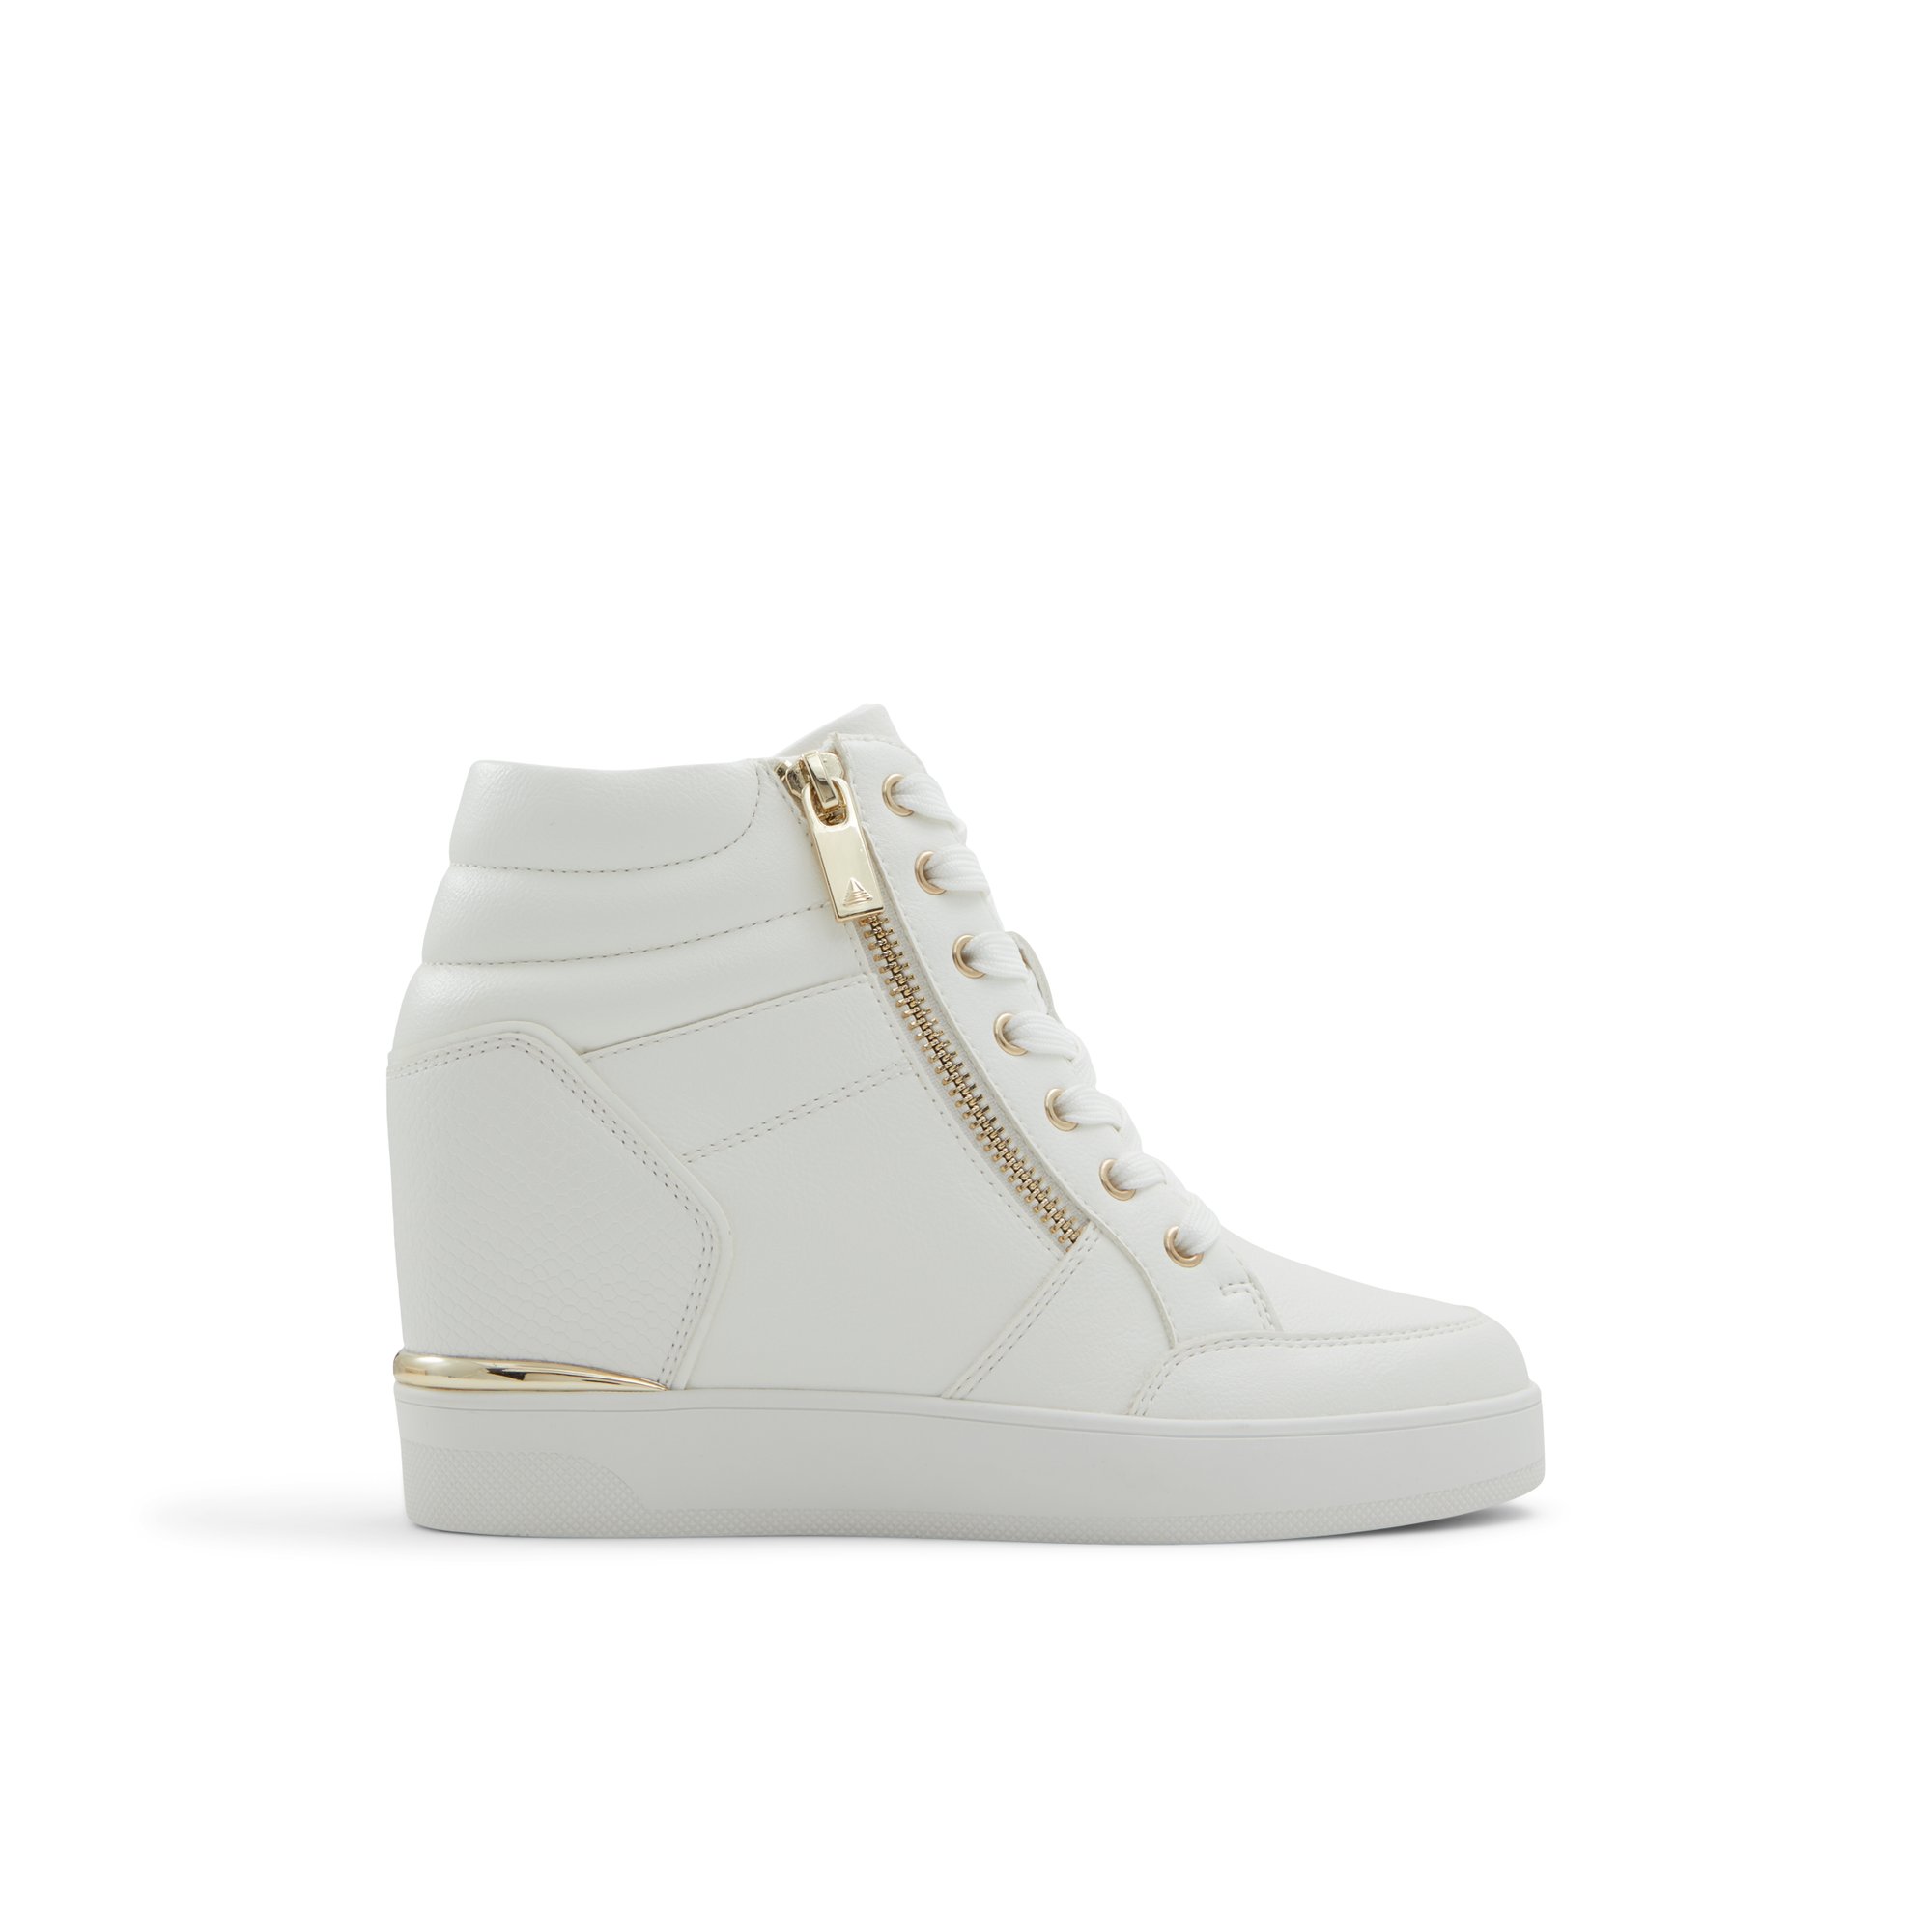 ALDO Ereliclya - Women's Platform and Wedge Sneaker Sneakers - White